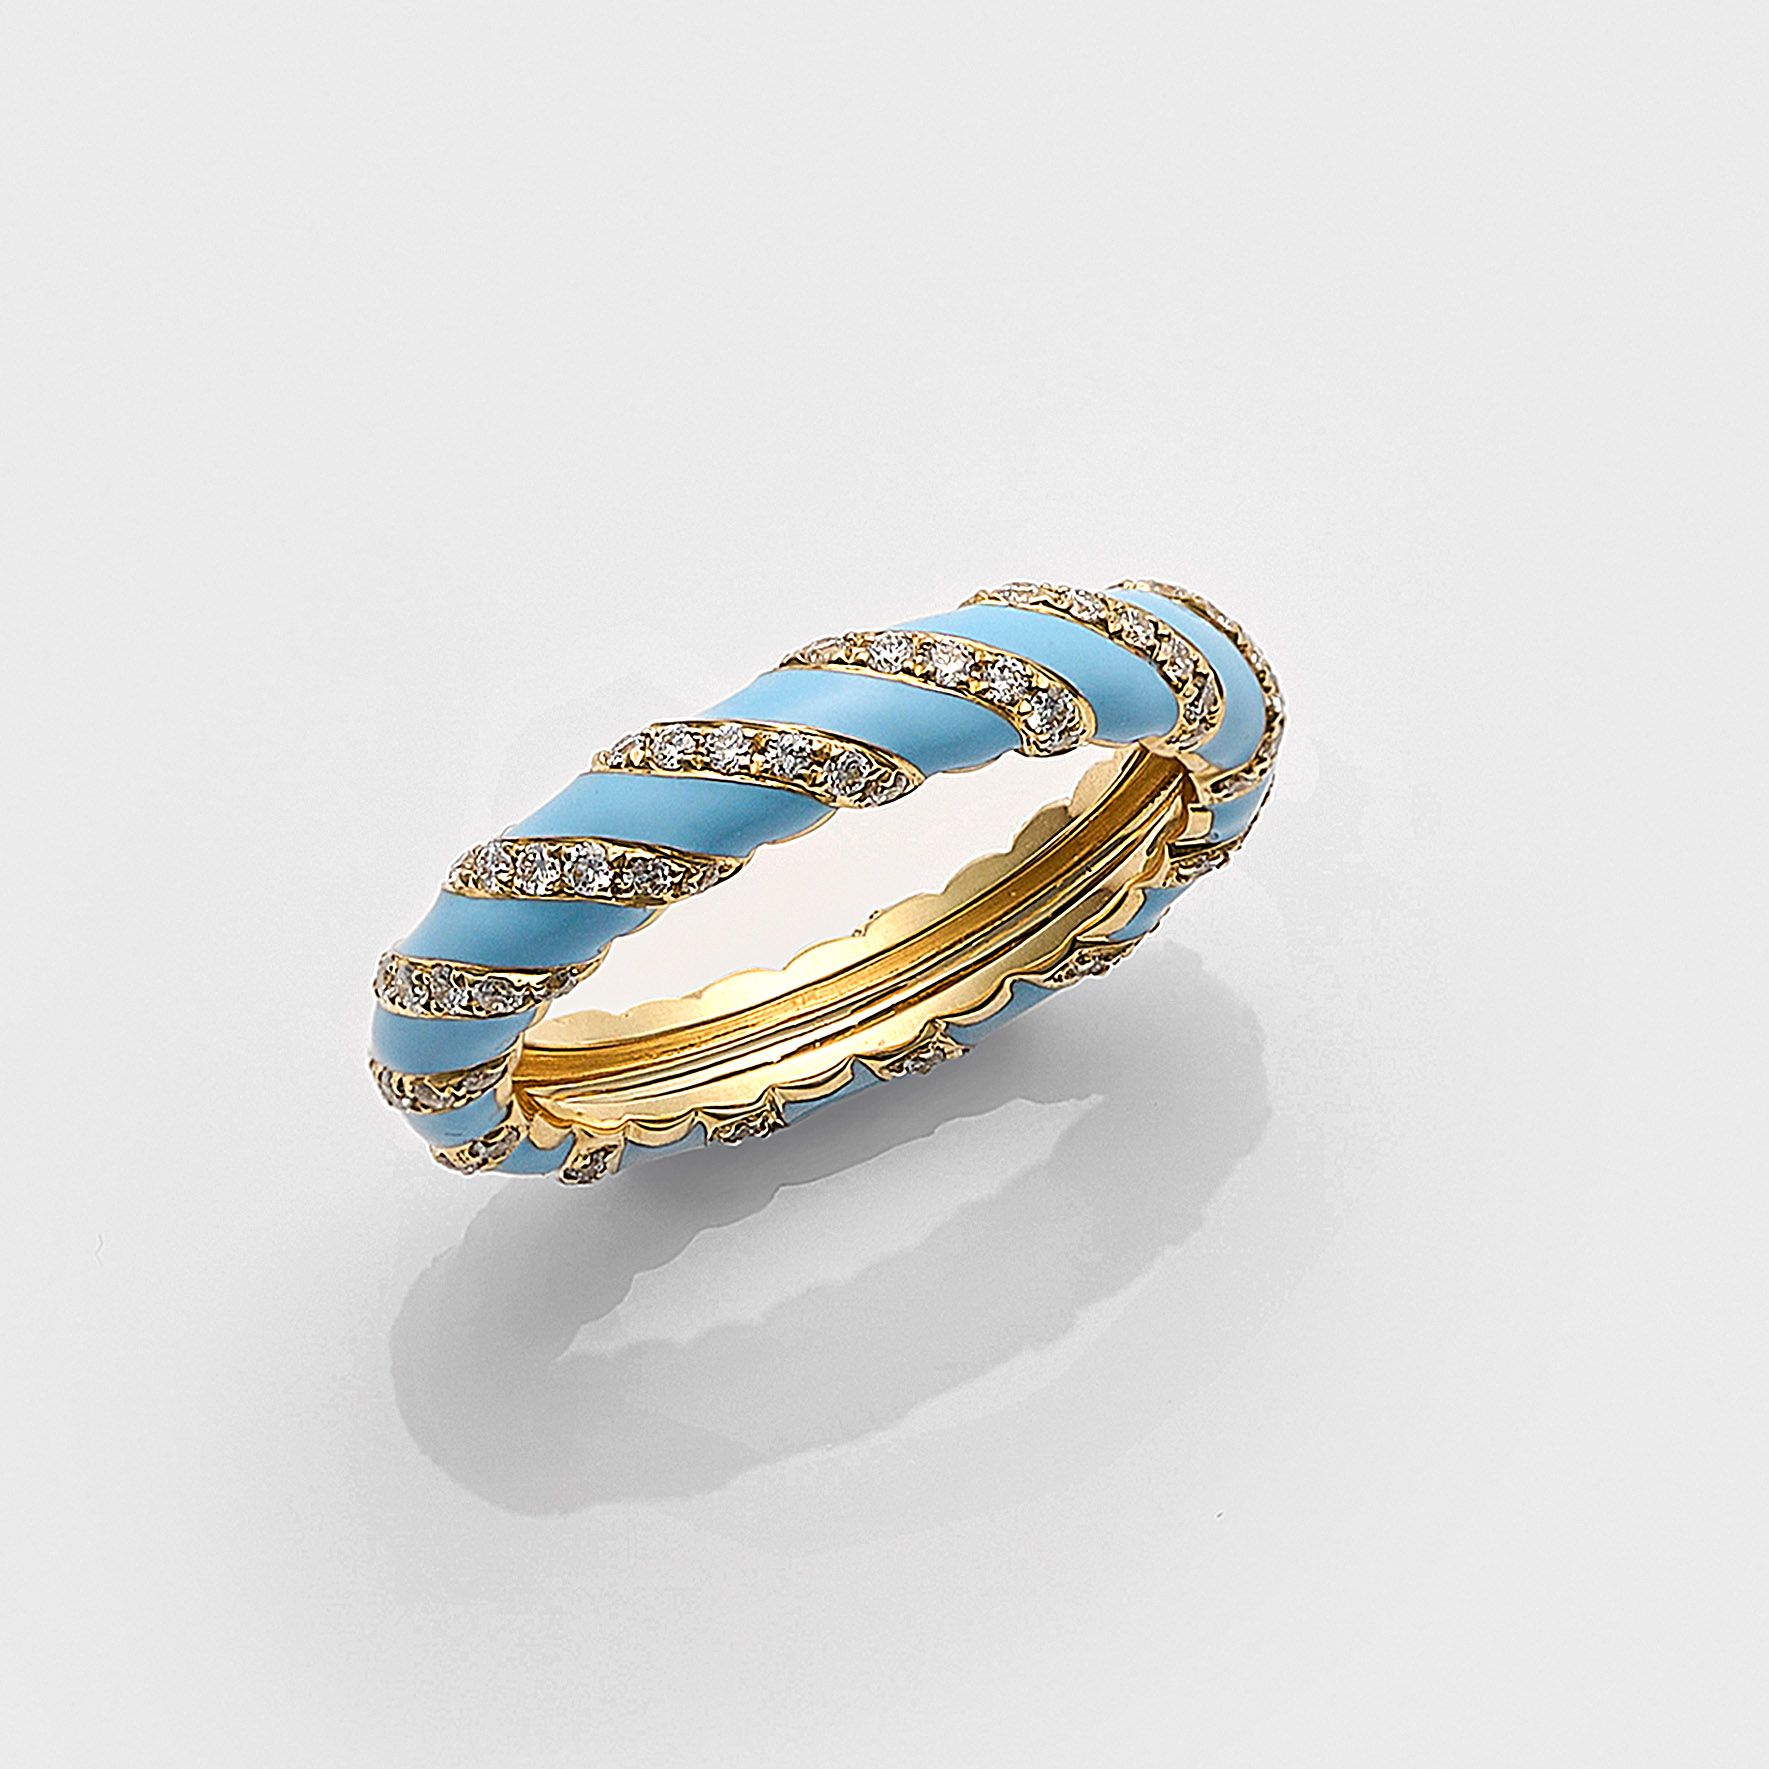 Null 黄金镶钻细绳戒指，部分饰以绿松石色珐琅，共镶嵌约 0.75 克拉小钻石；重约 4.27 克。 
镶嵌约 0.75 克拉小钻石的 18K 金戒指。